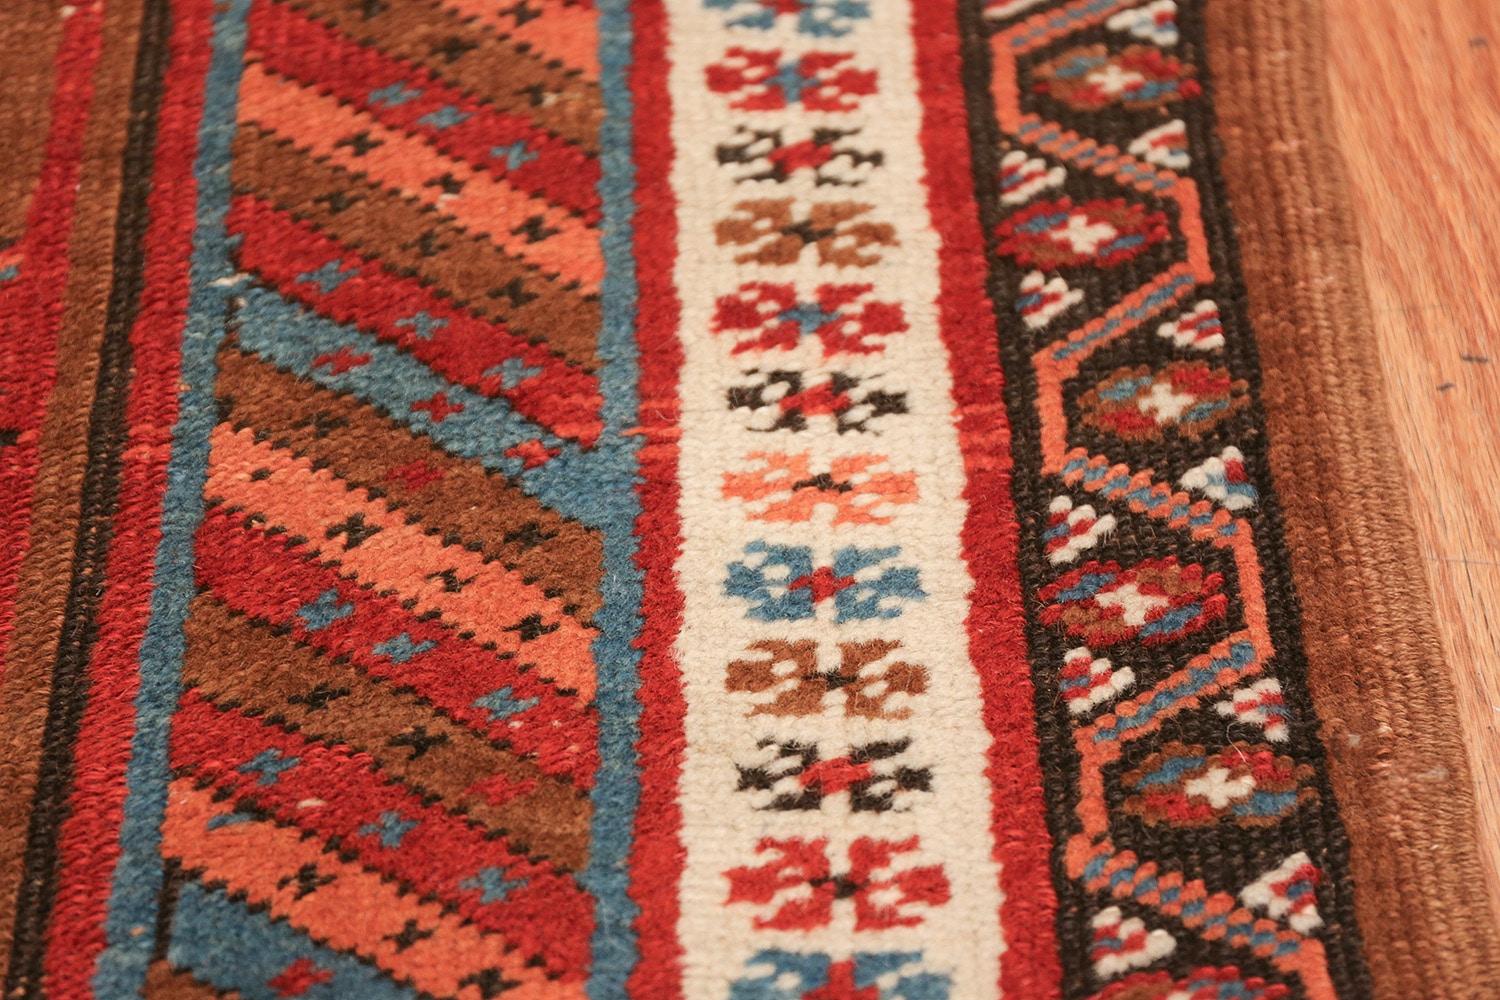 Antique Tribal Persian Bakshaish Runner Rug, Country of origin / rug type: Persian rug, Circa date: 1880. Size: 3 ft 3 in x 14 ft (0.99 m x 4.27 m)

